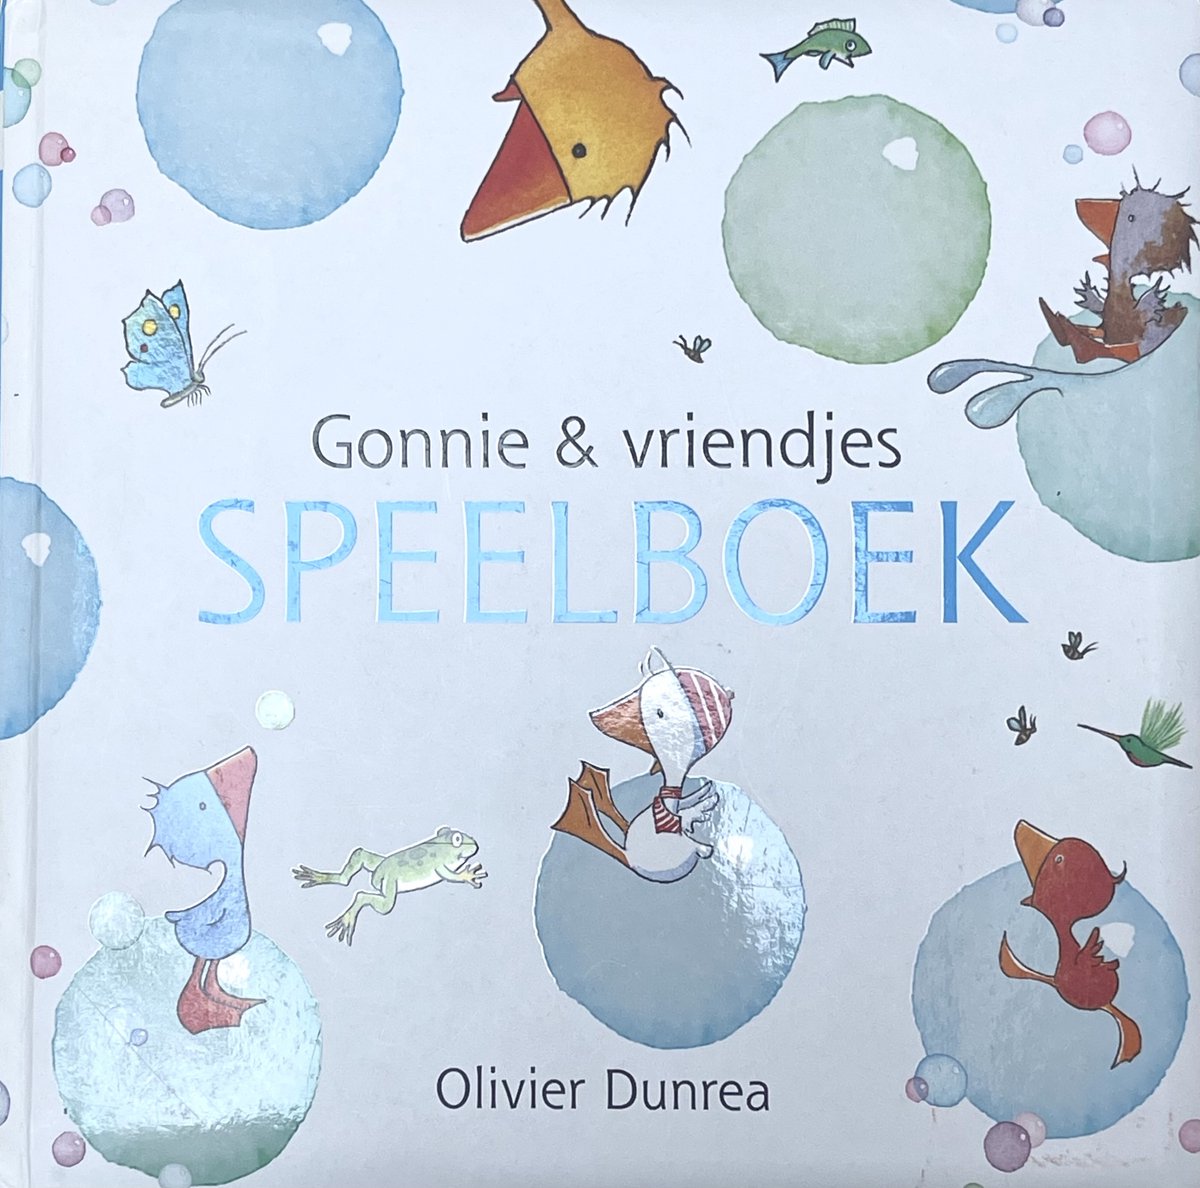 Gonnie & vriendjes - Speelboek - Olivier Dunrea